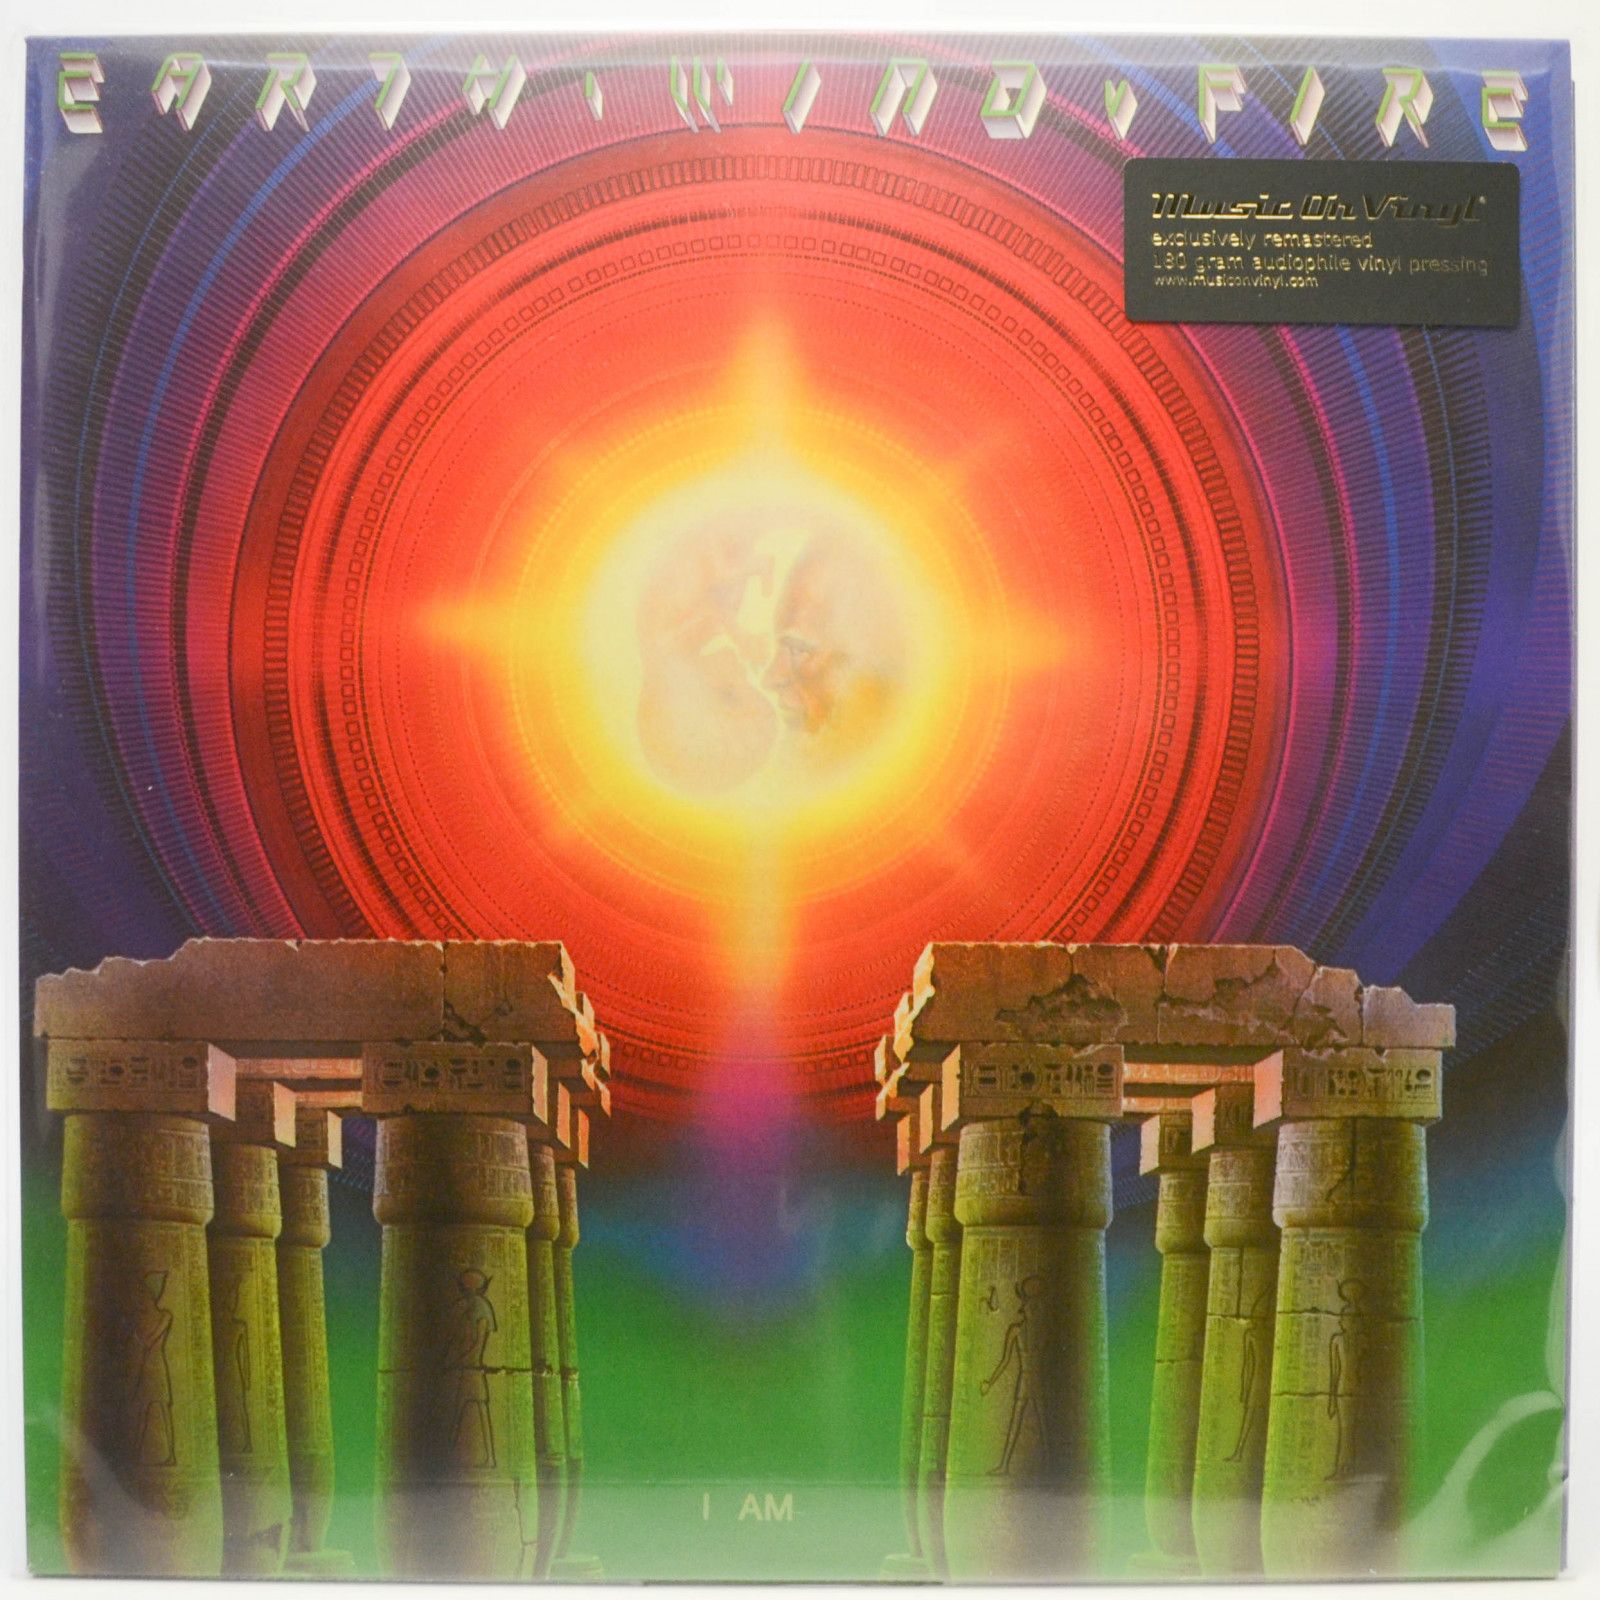 Earth, Wind & Fire — I Am, 1979